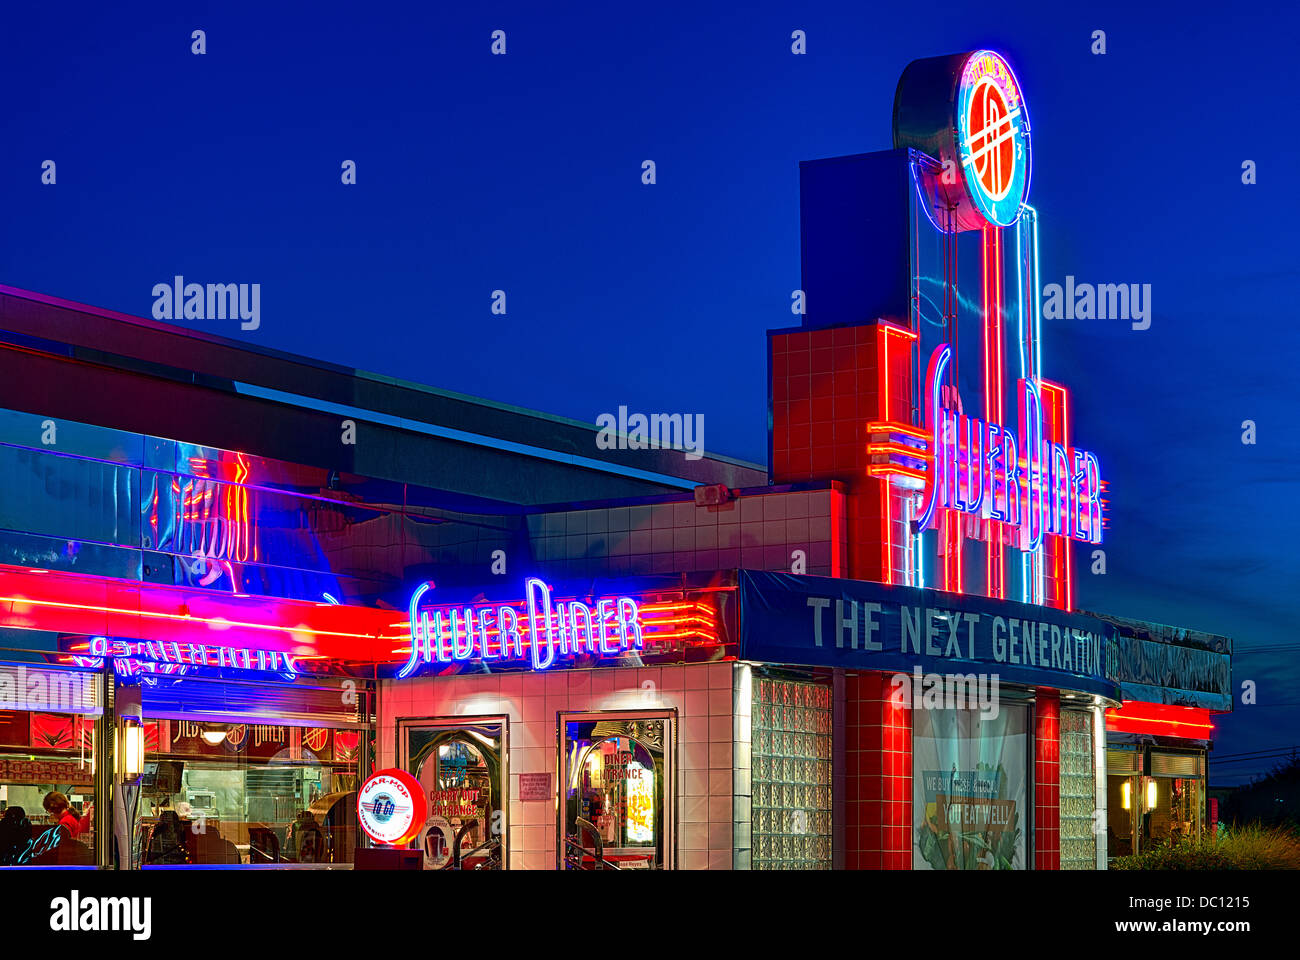 Silber Diner Restaurant, Kette, Cherry Hill, New Jersey, USA  Stockfotografie - Alamy